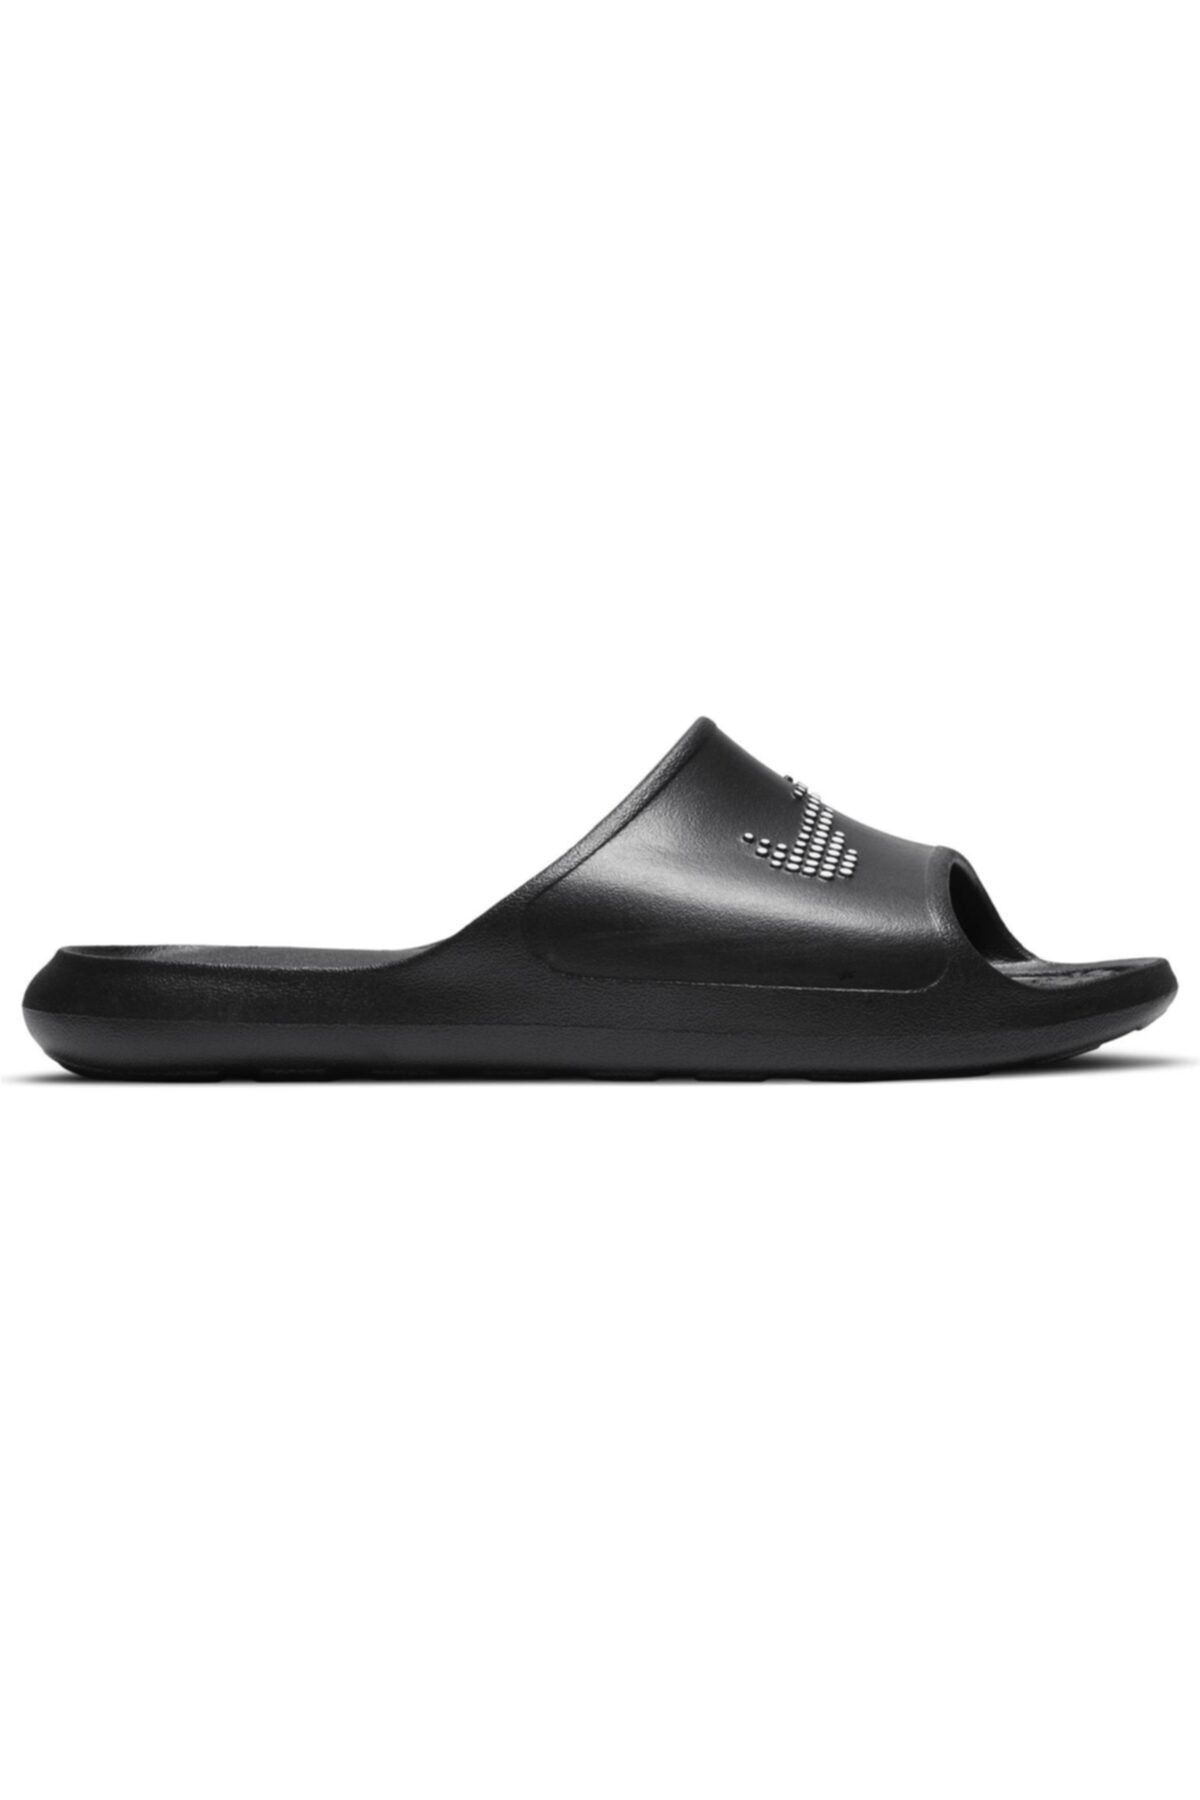 Nike مردانه سیاه ویکتوریا یک حمام slıde slippers cz5478-001